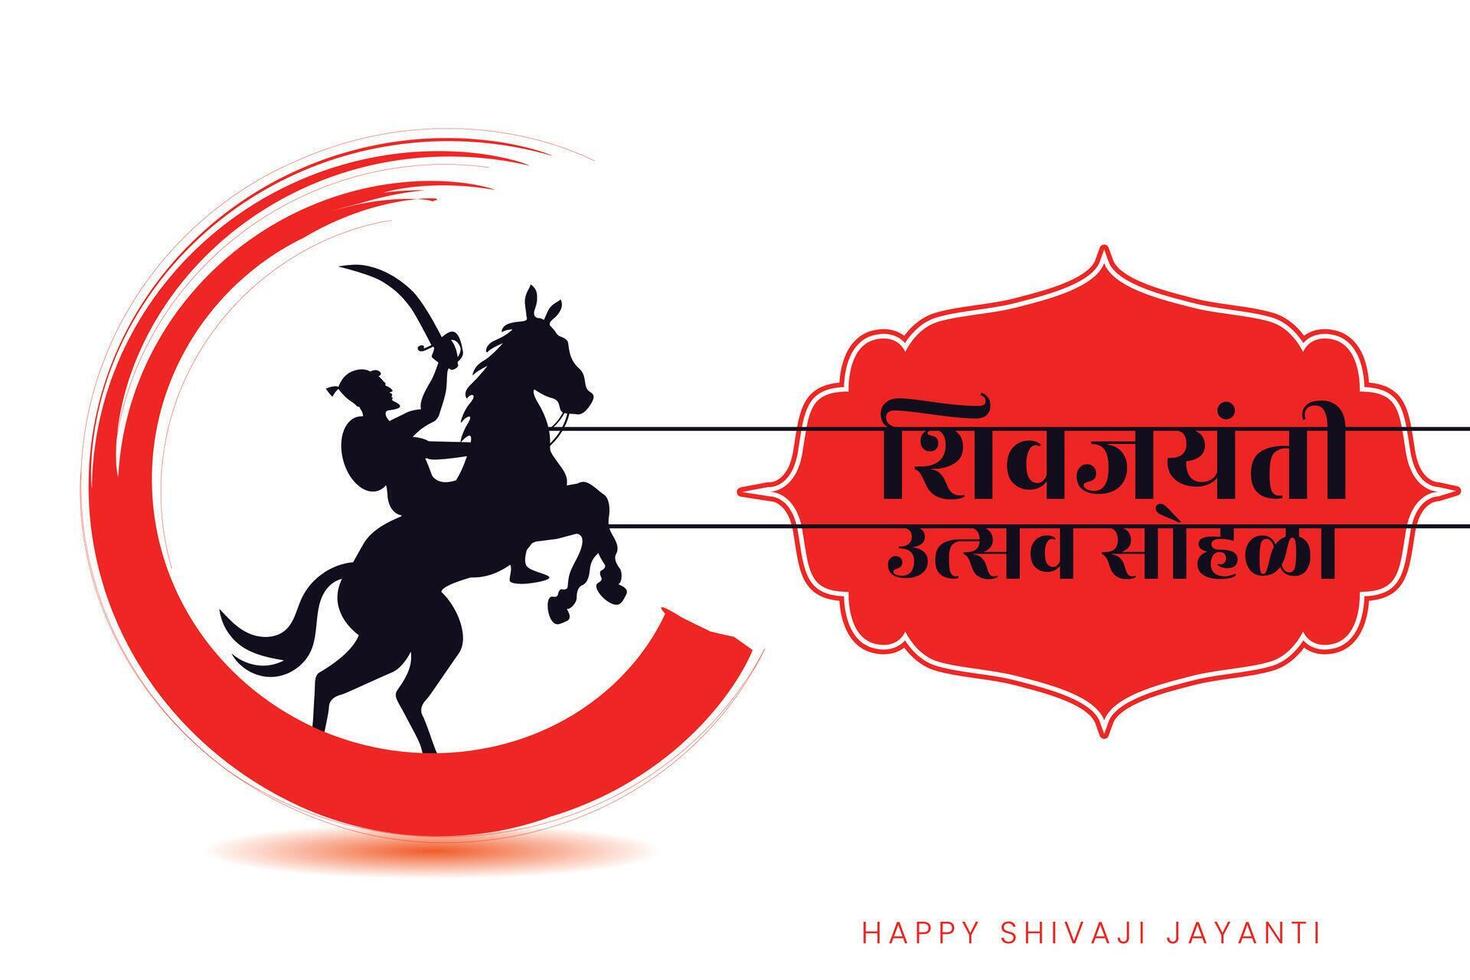 chhatrapati Shivaji Maharaj Jayanti Gruß, großartig indisch Maratha König Feier Vektor